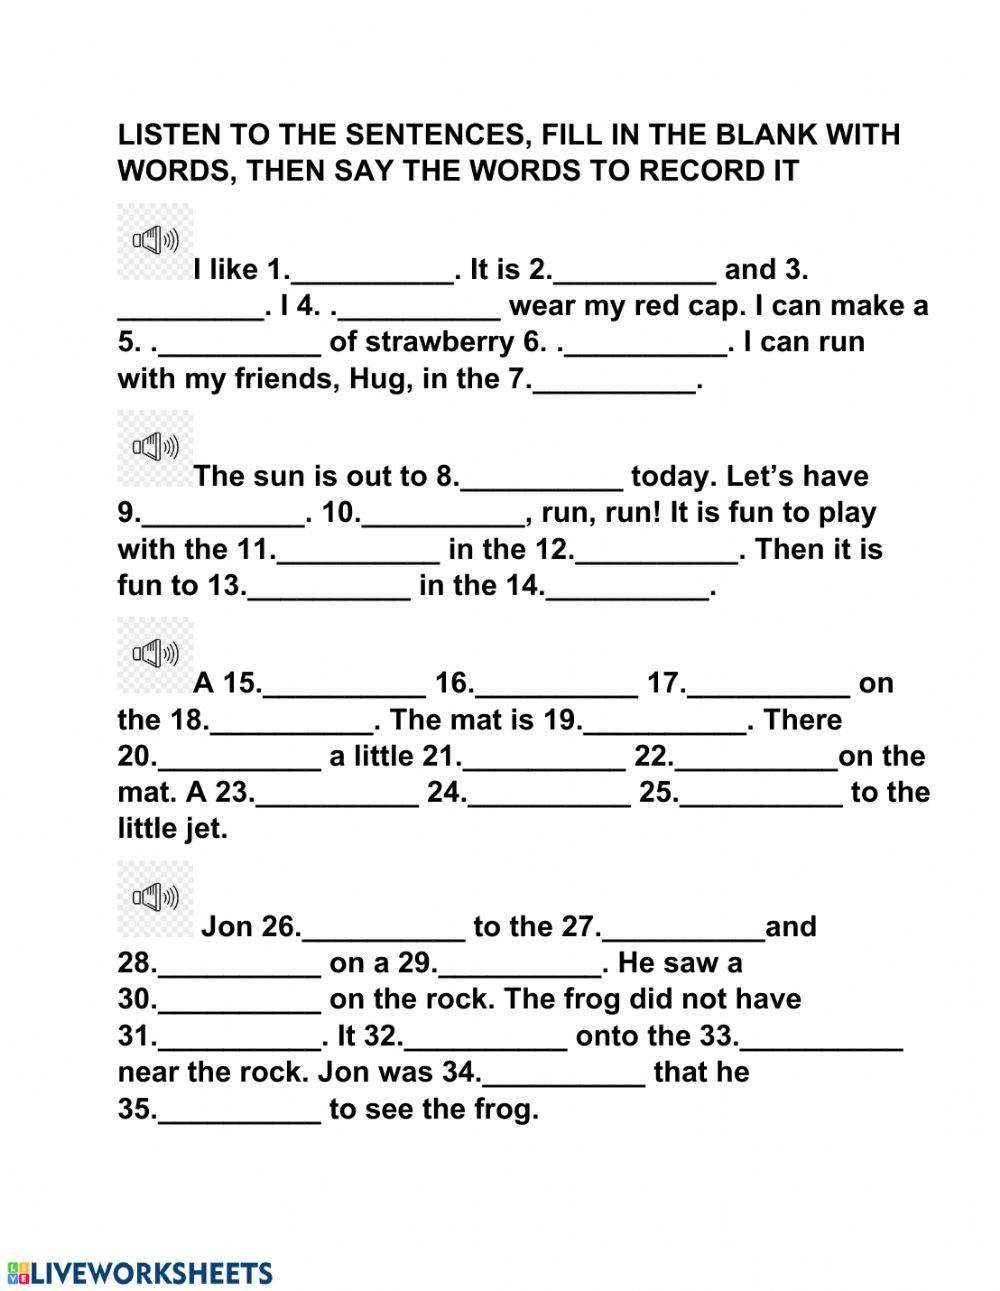 Phonics short vowels test